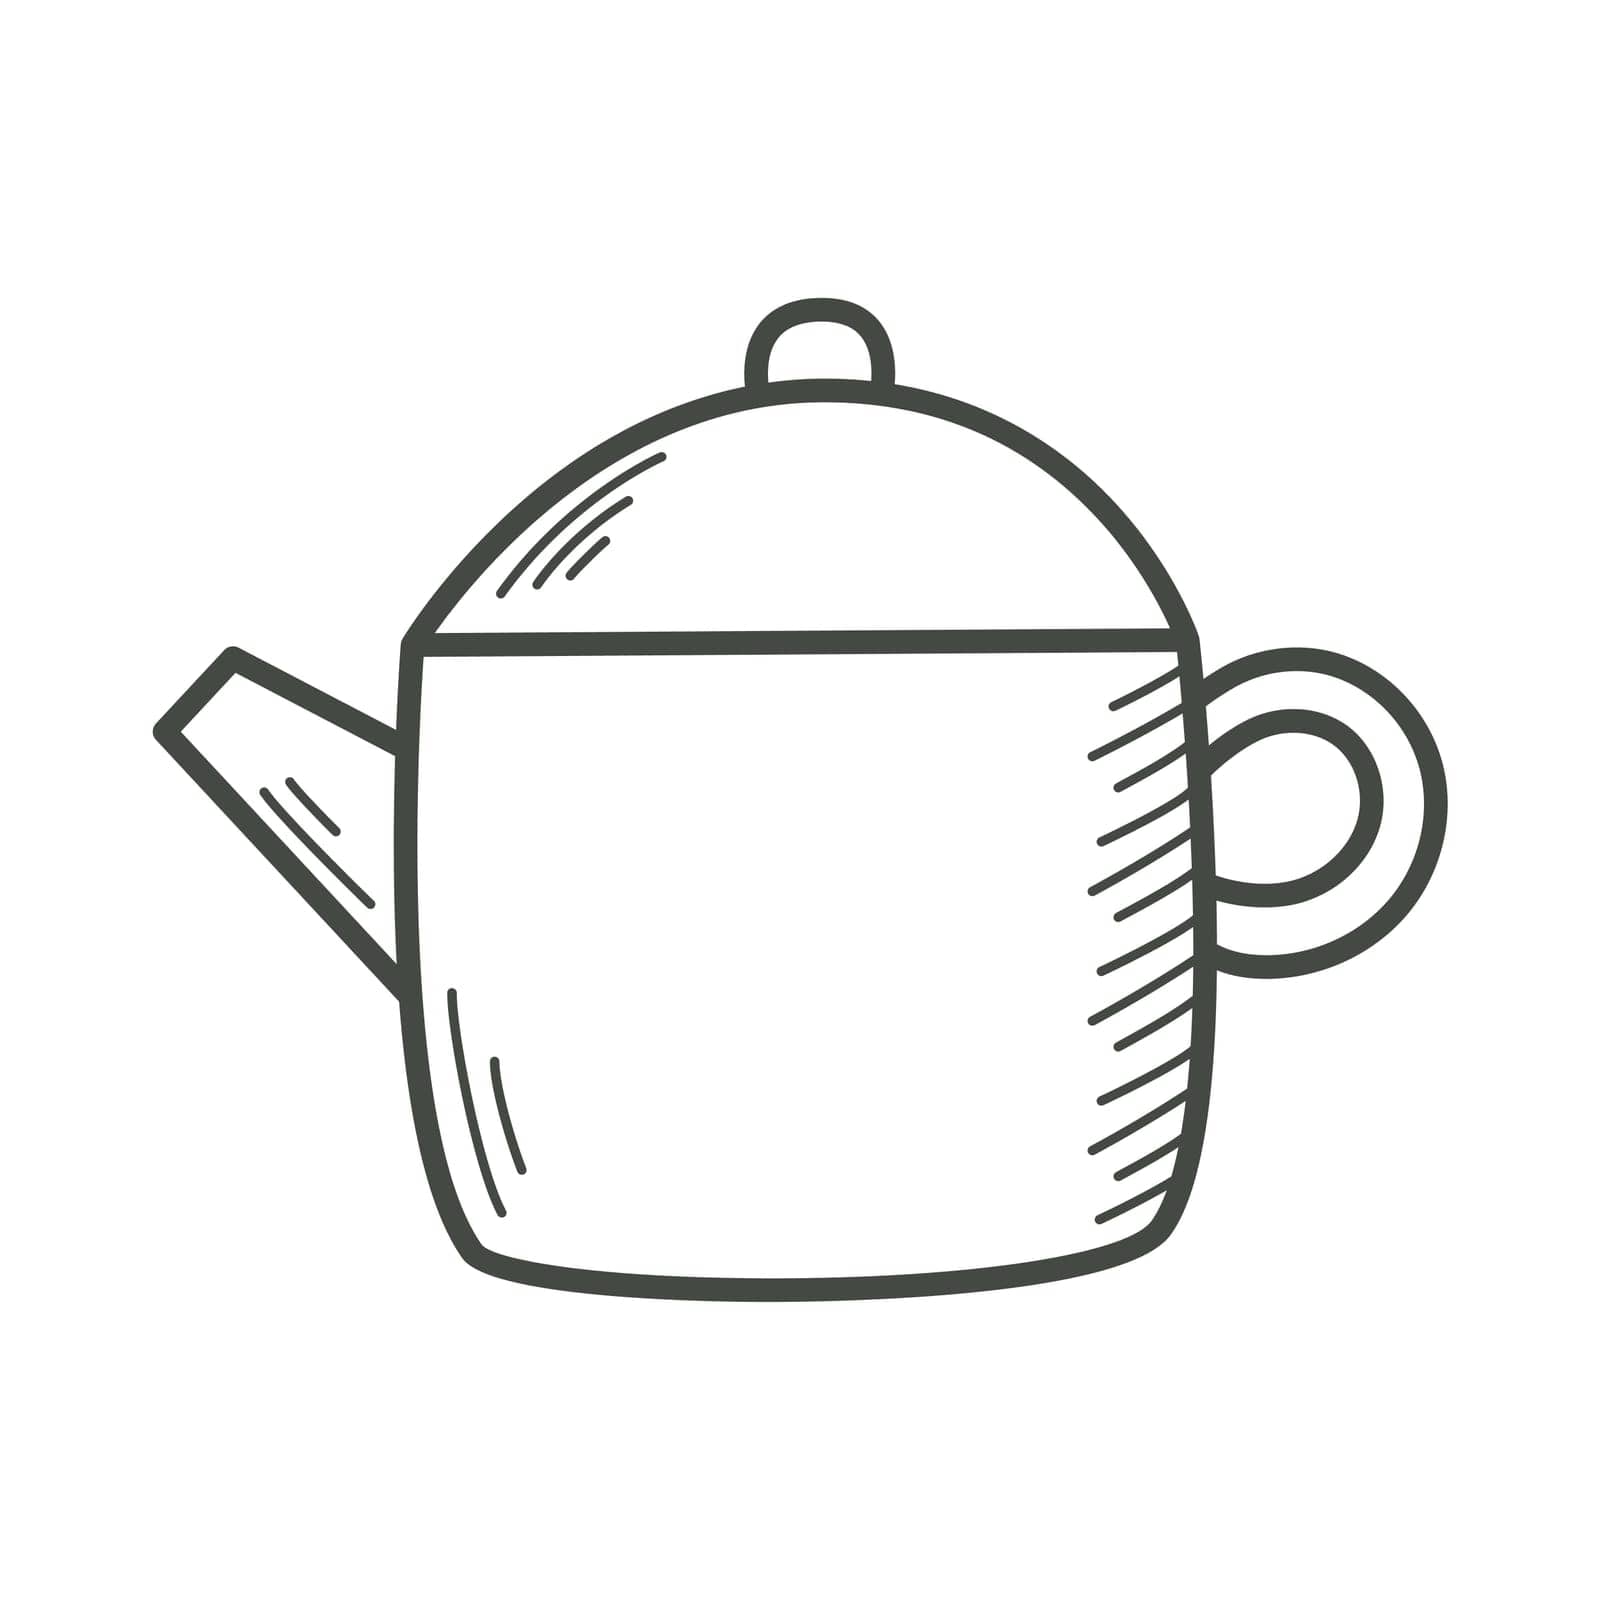 Glass teapot doodle sketch style clip art. Tea kettle, simple isolated vector illustration. Kitchen utensil item ink outline